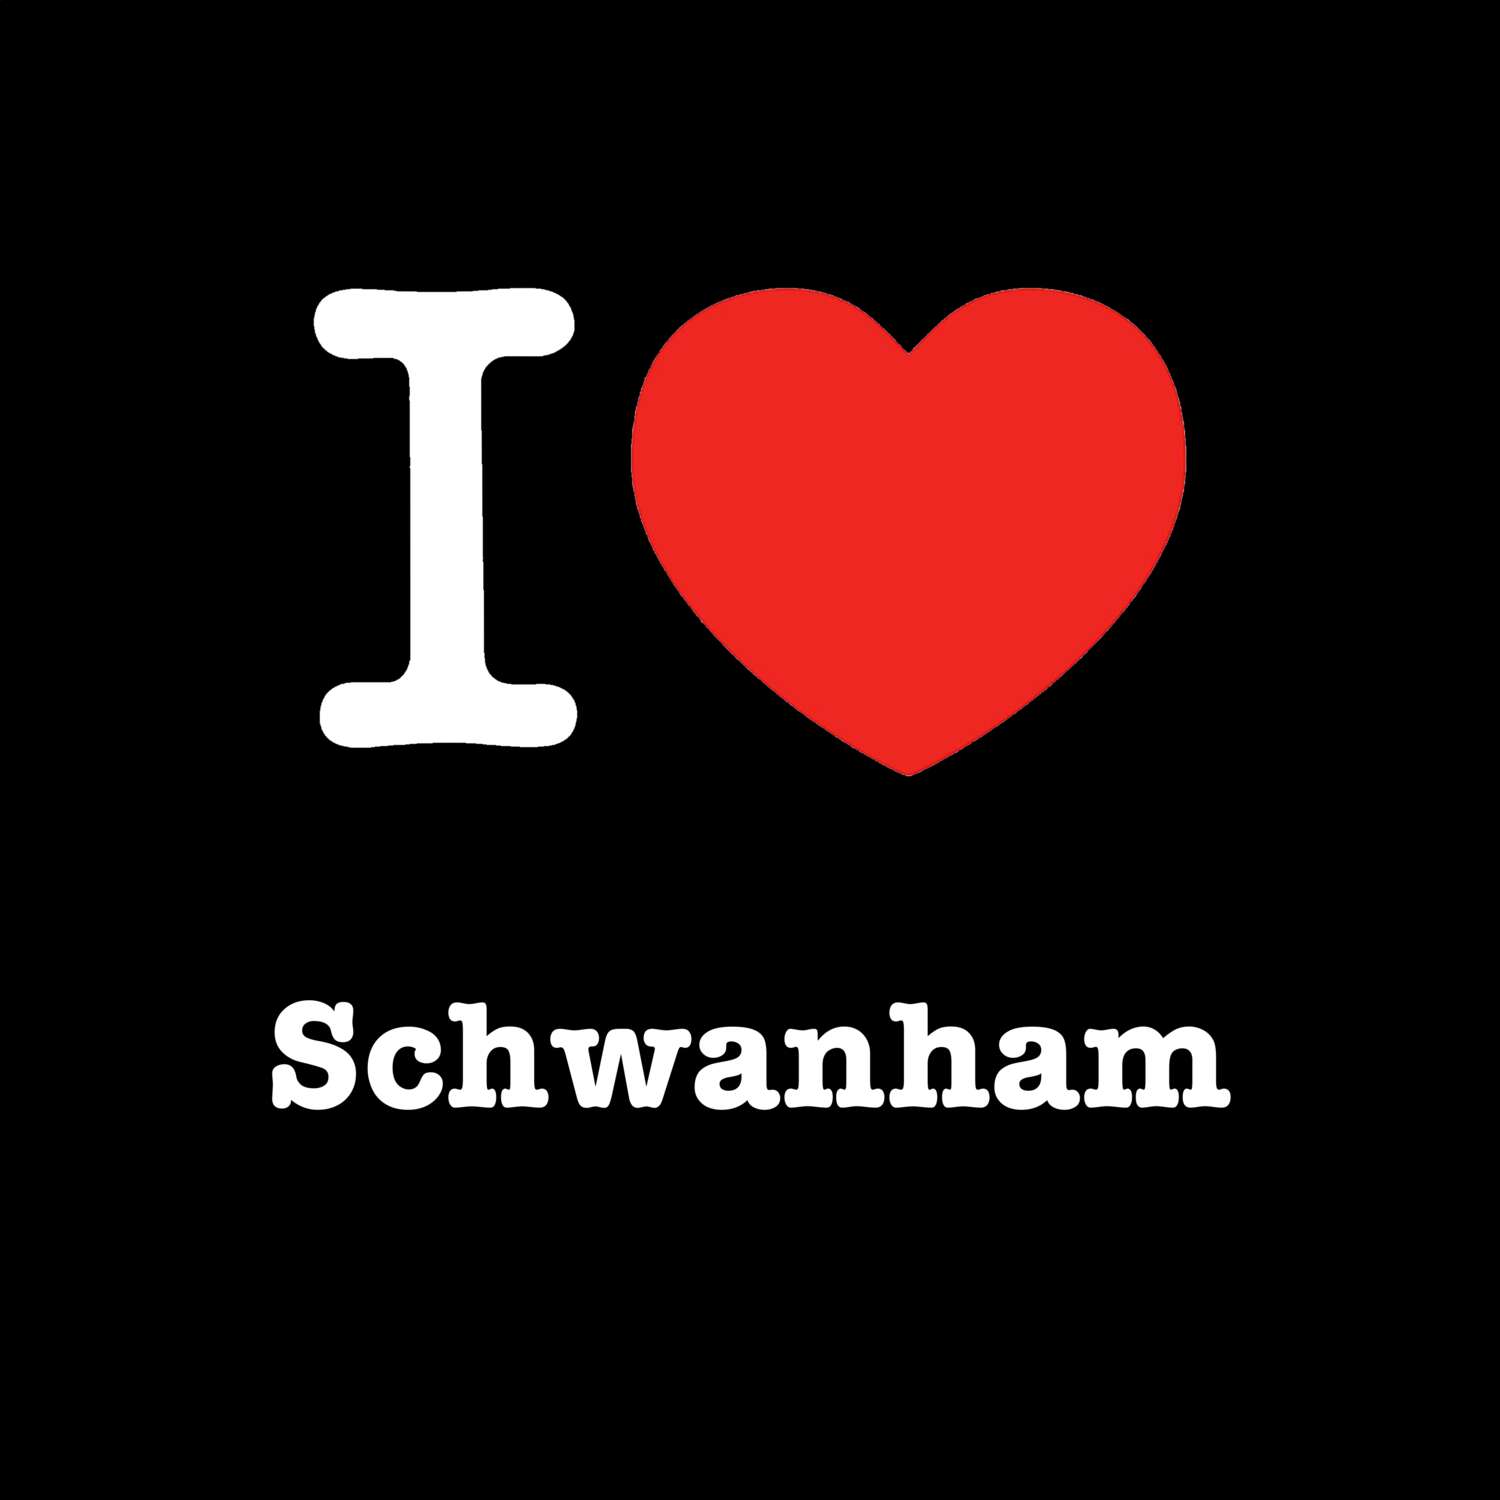 Schwanham T-Shirt »I love«